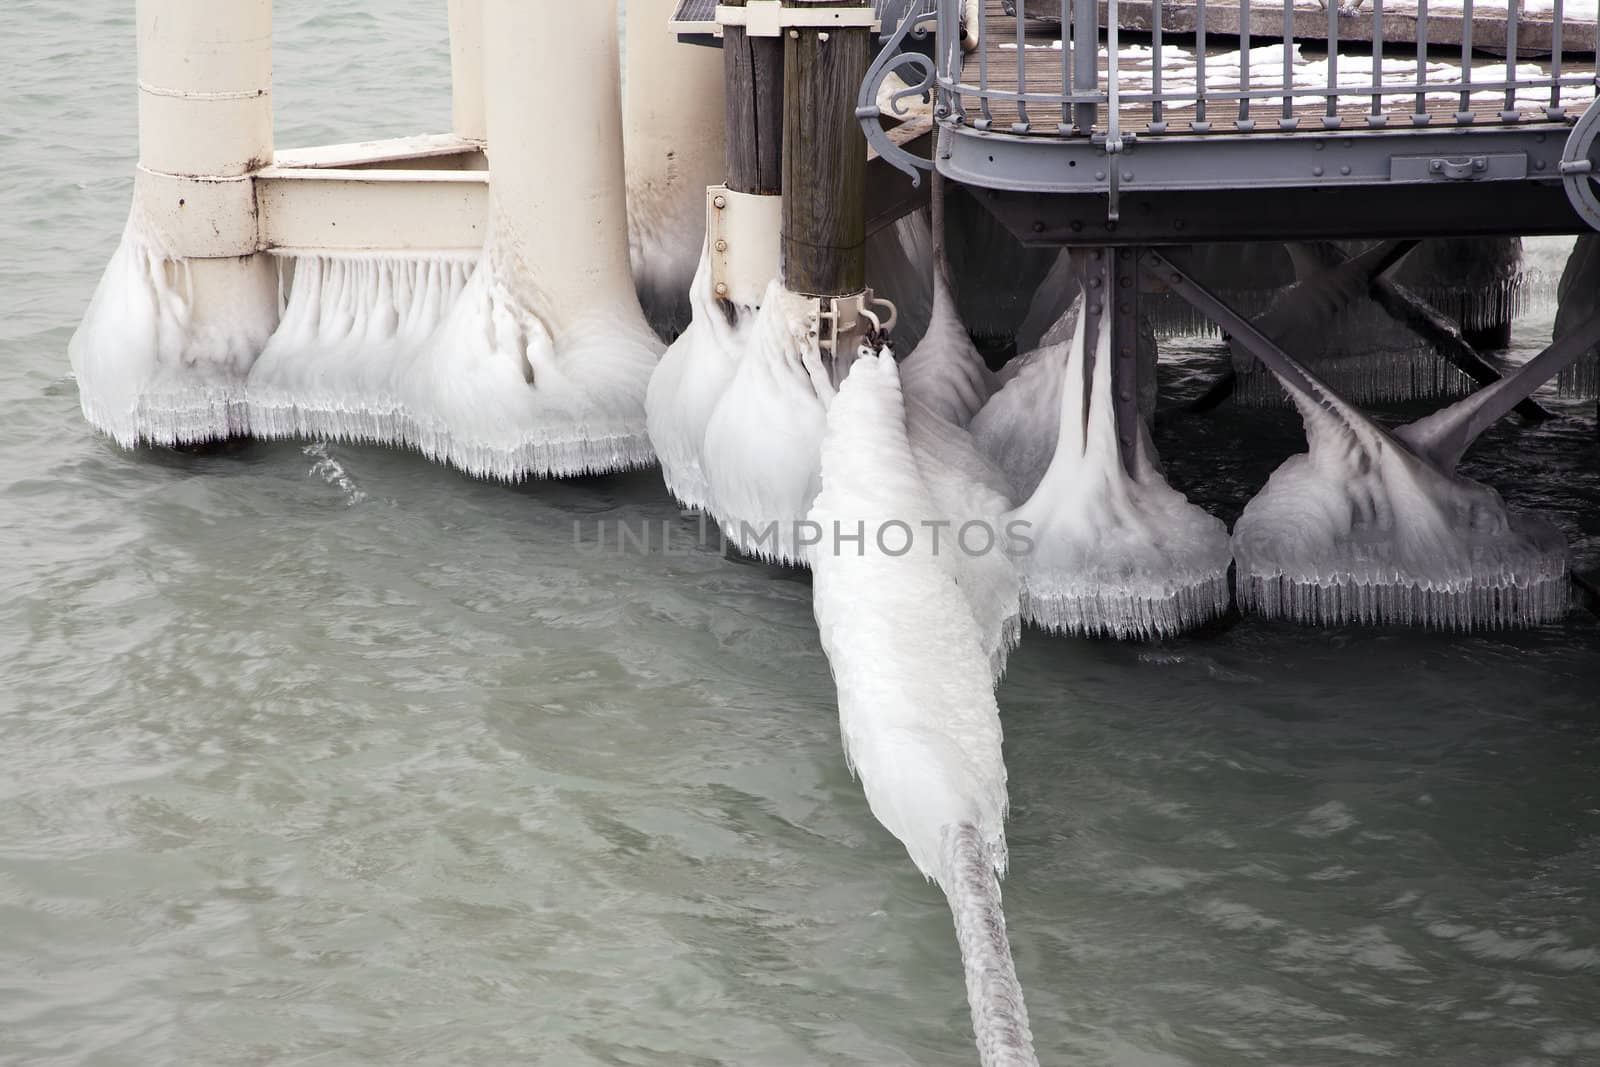 Heavy winter weather deposits ice on moorings in the water